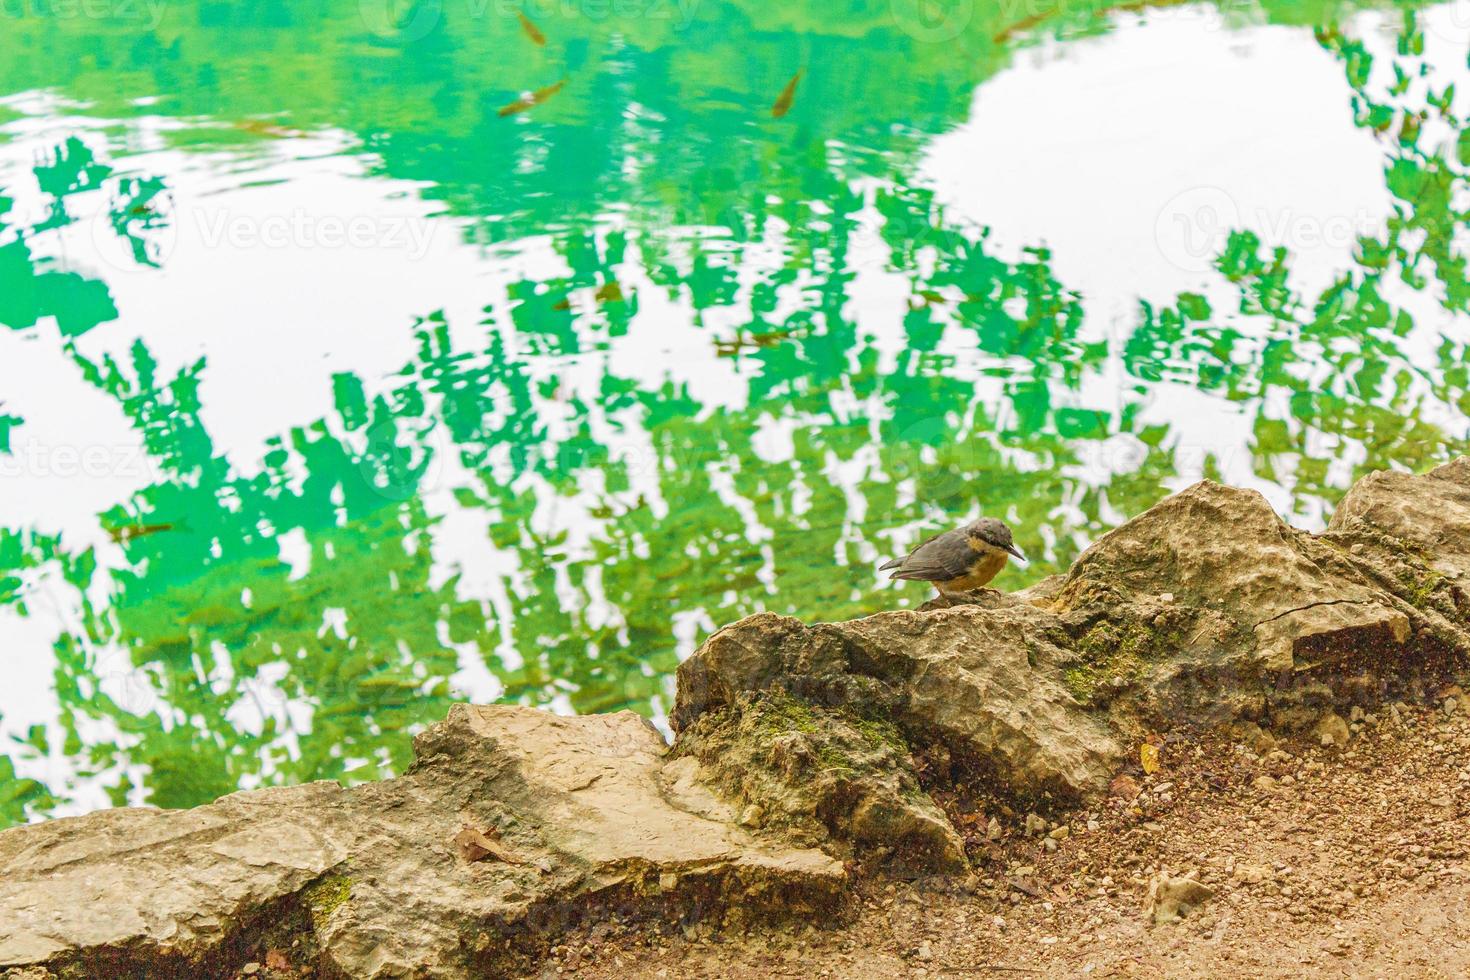 pássaro da croácia do parque nacional dos lagos plitvice e águas cristalinas azul-turquesa. foto